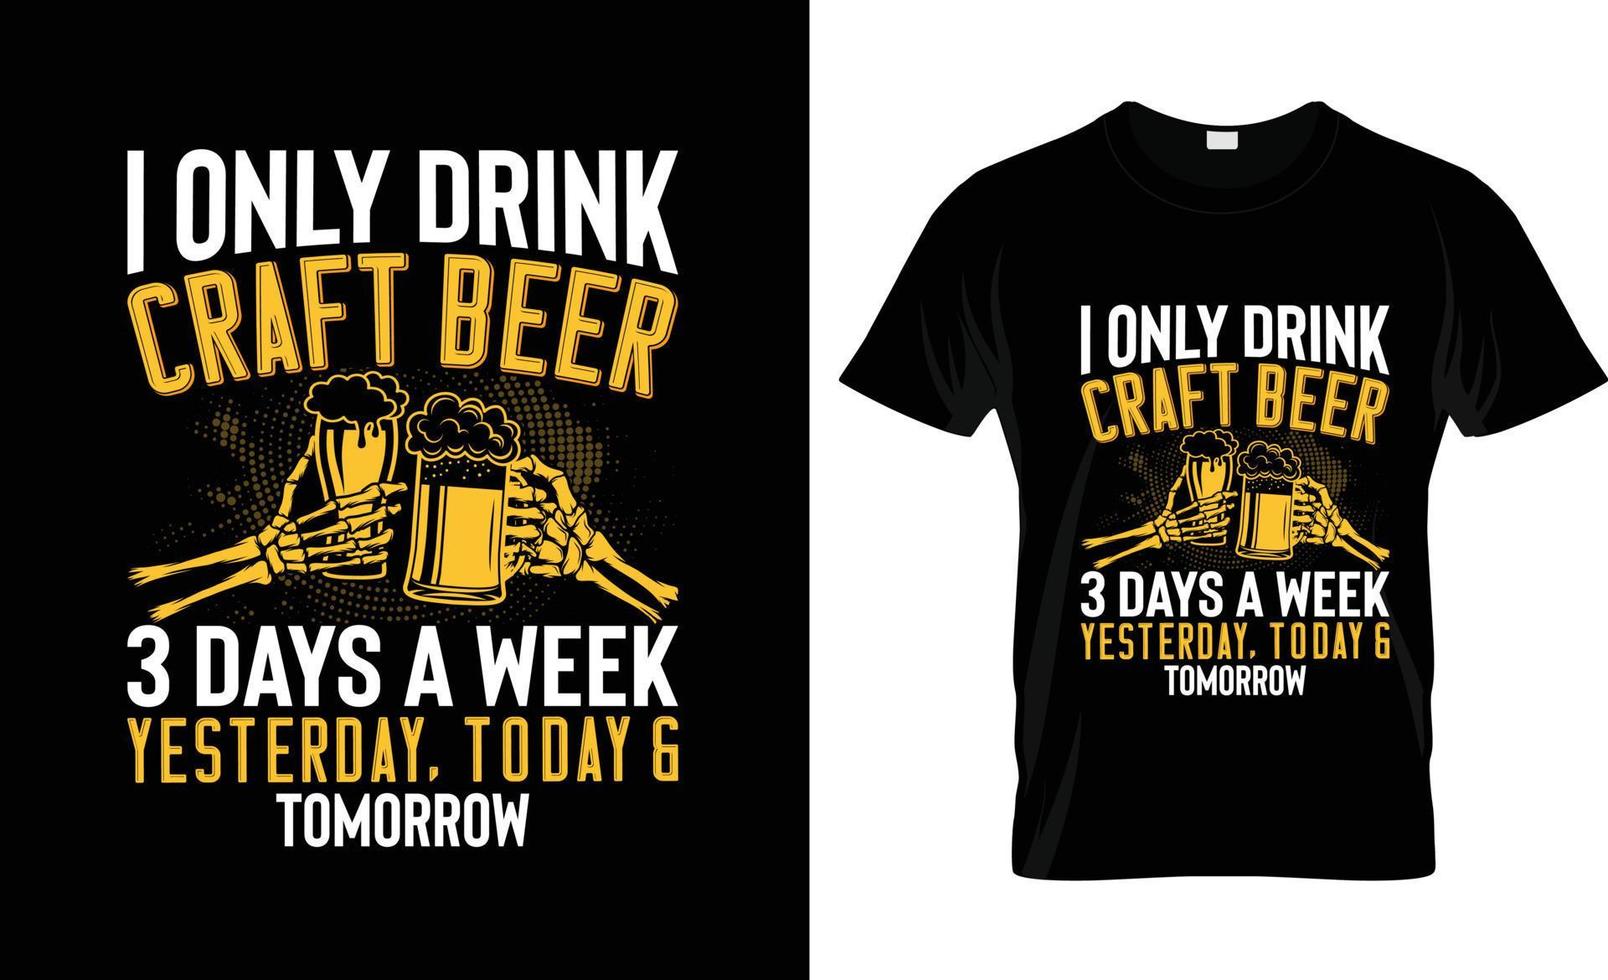 design de camiseta de cerveja artesanal, slogan de camiseta de cerveja artesanal e design de vestuário, tipografia de cerveja artesanal, vetor de cerveja artesanal, ilustração de cerveja artesanal